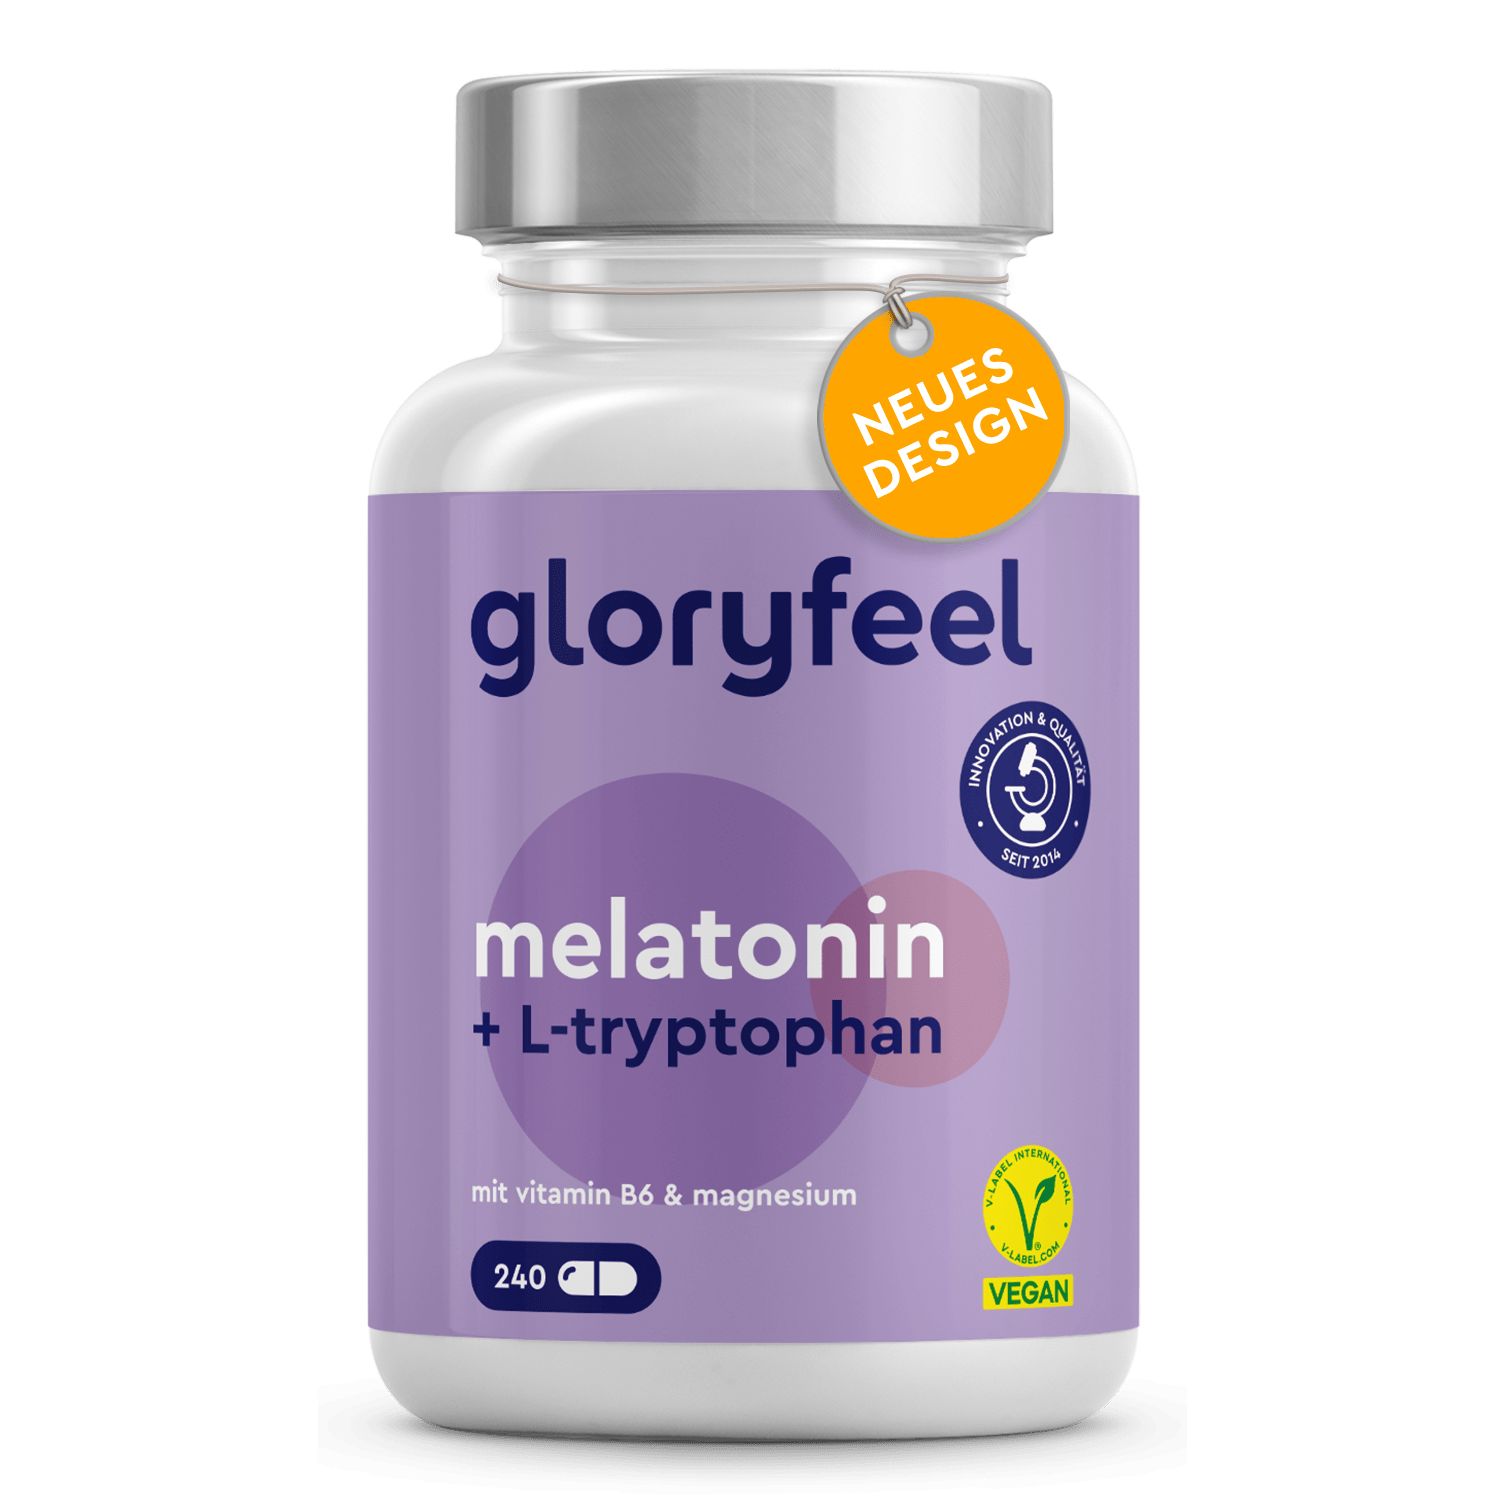 Gloryfeel® melatonin + L-tryptophan, vitamin B6 & magnesium capsules